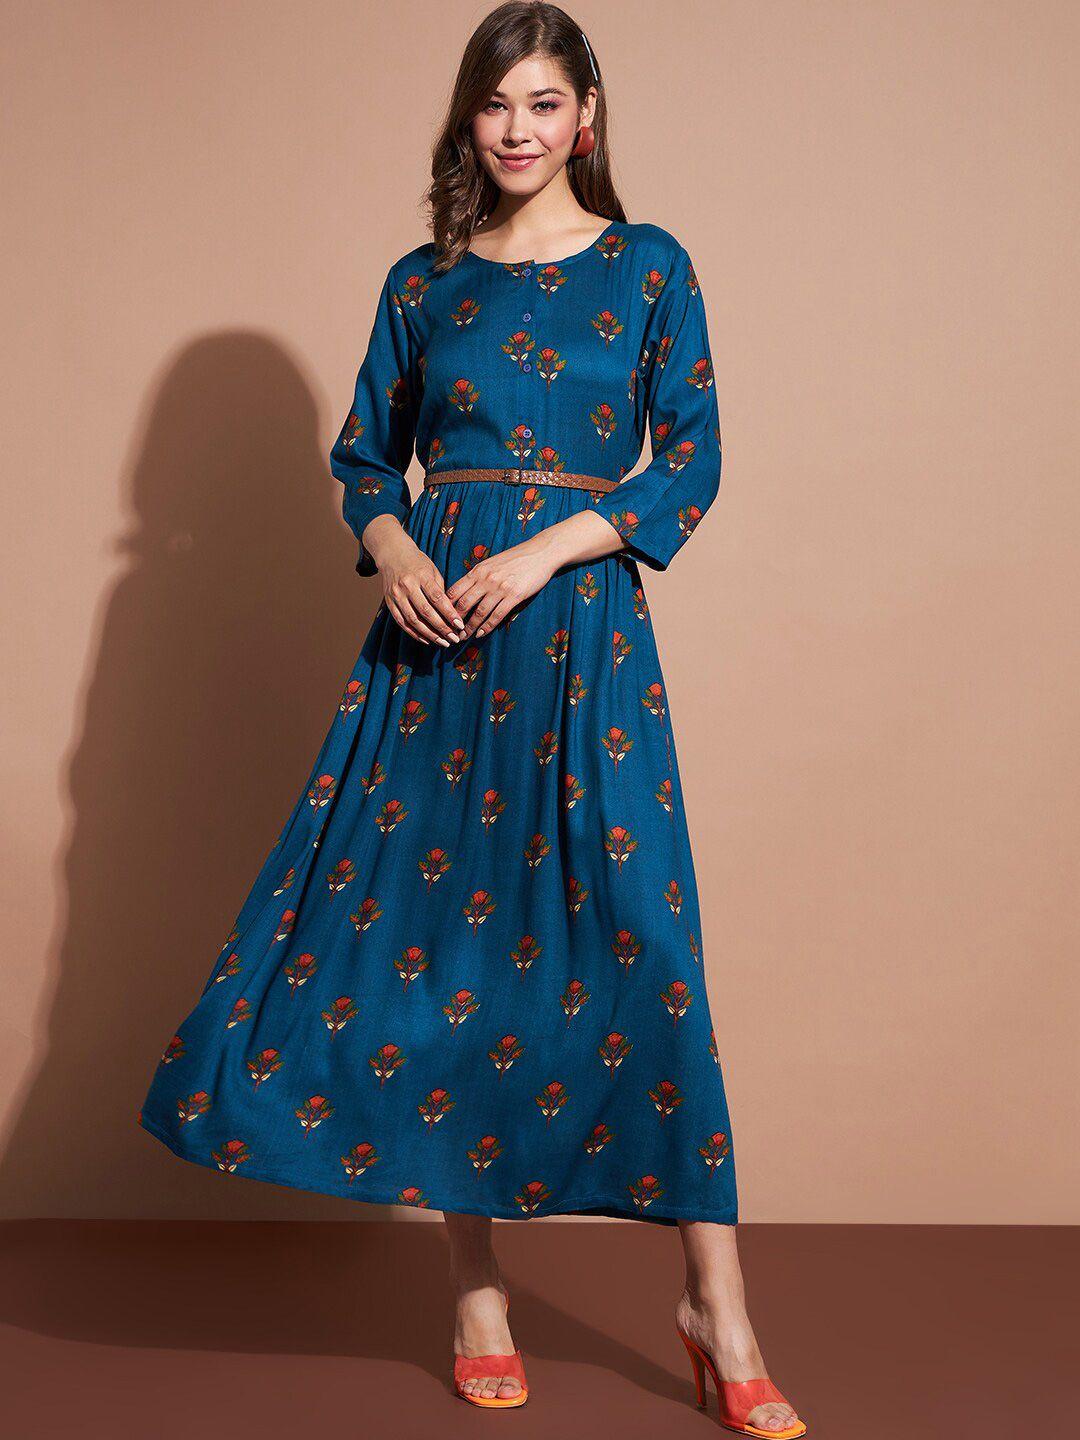 dressberry teal blue floral print cotton fit & flare midi dress with belt